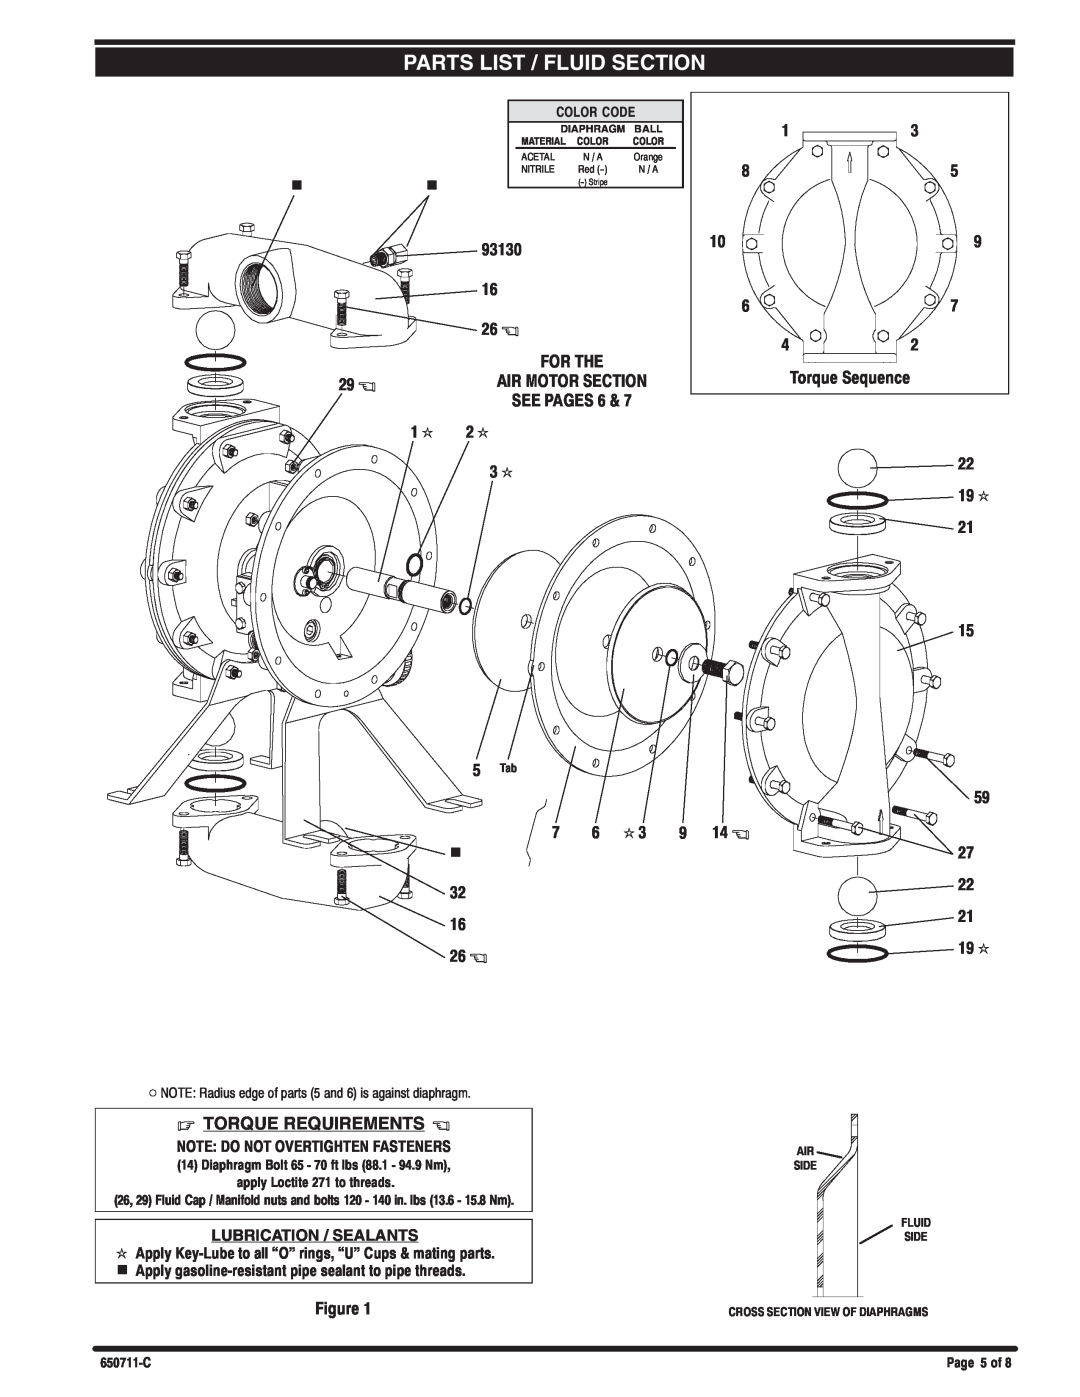 Ingersoll-Rand 650711-C k k k k, Torque Requirements, Lubrication / Sealants, Parts List / Fluid Section, Diaphragm Ball 